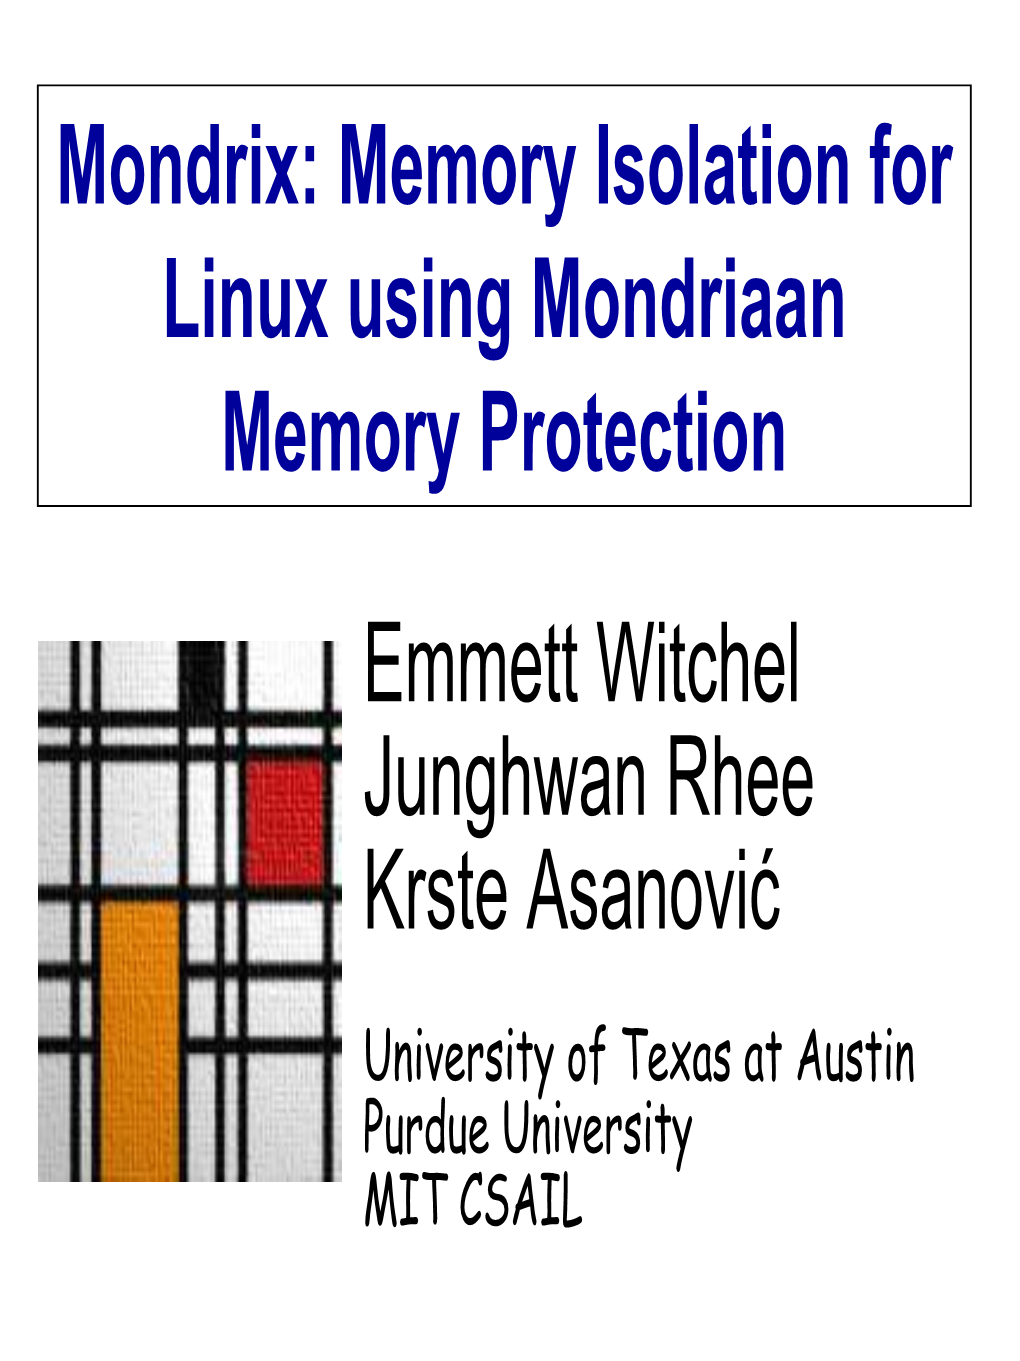 Mondrix: Memory Isolation for Linux Using Mondriaan Memory Protection